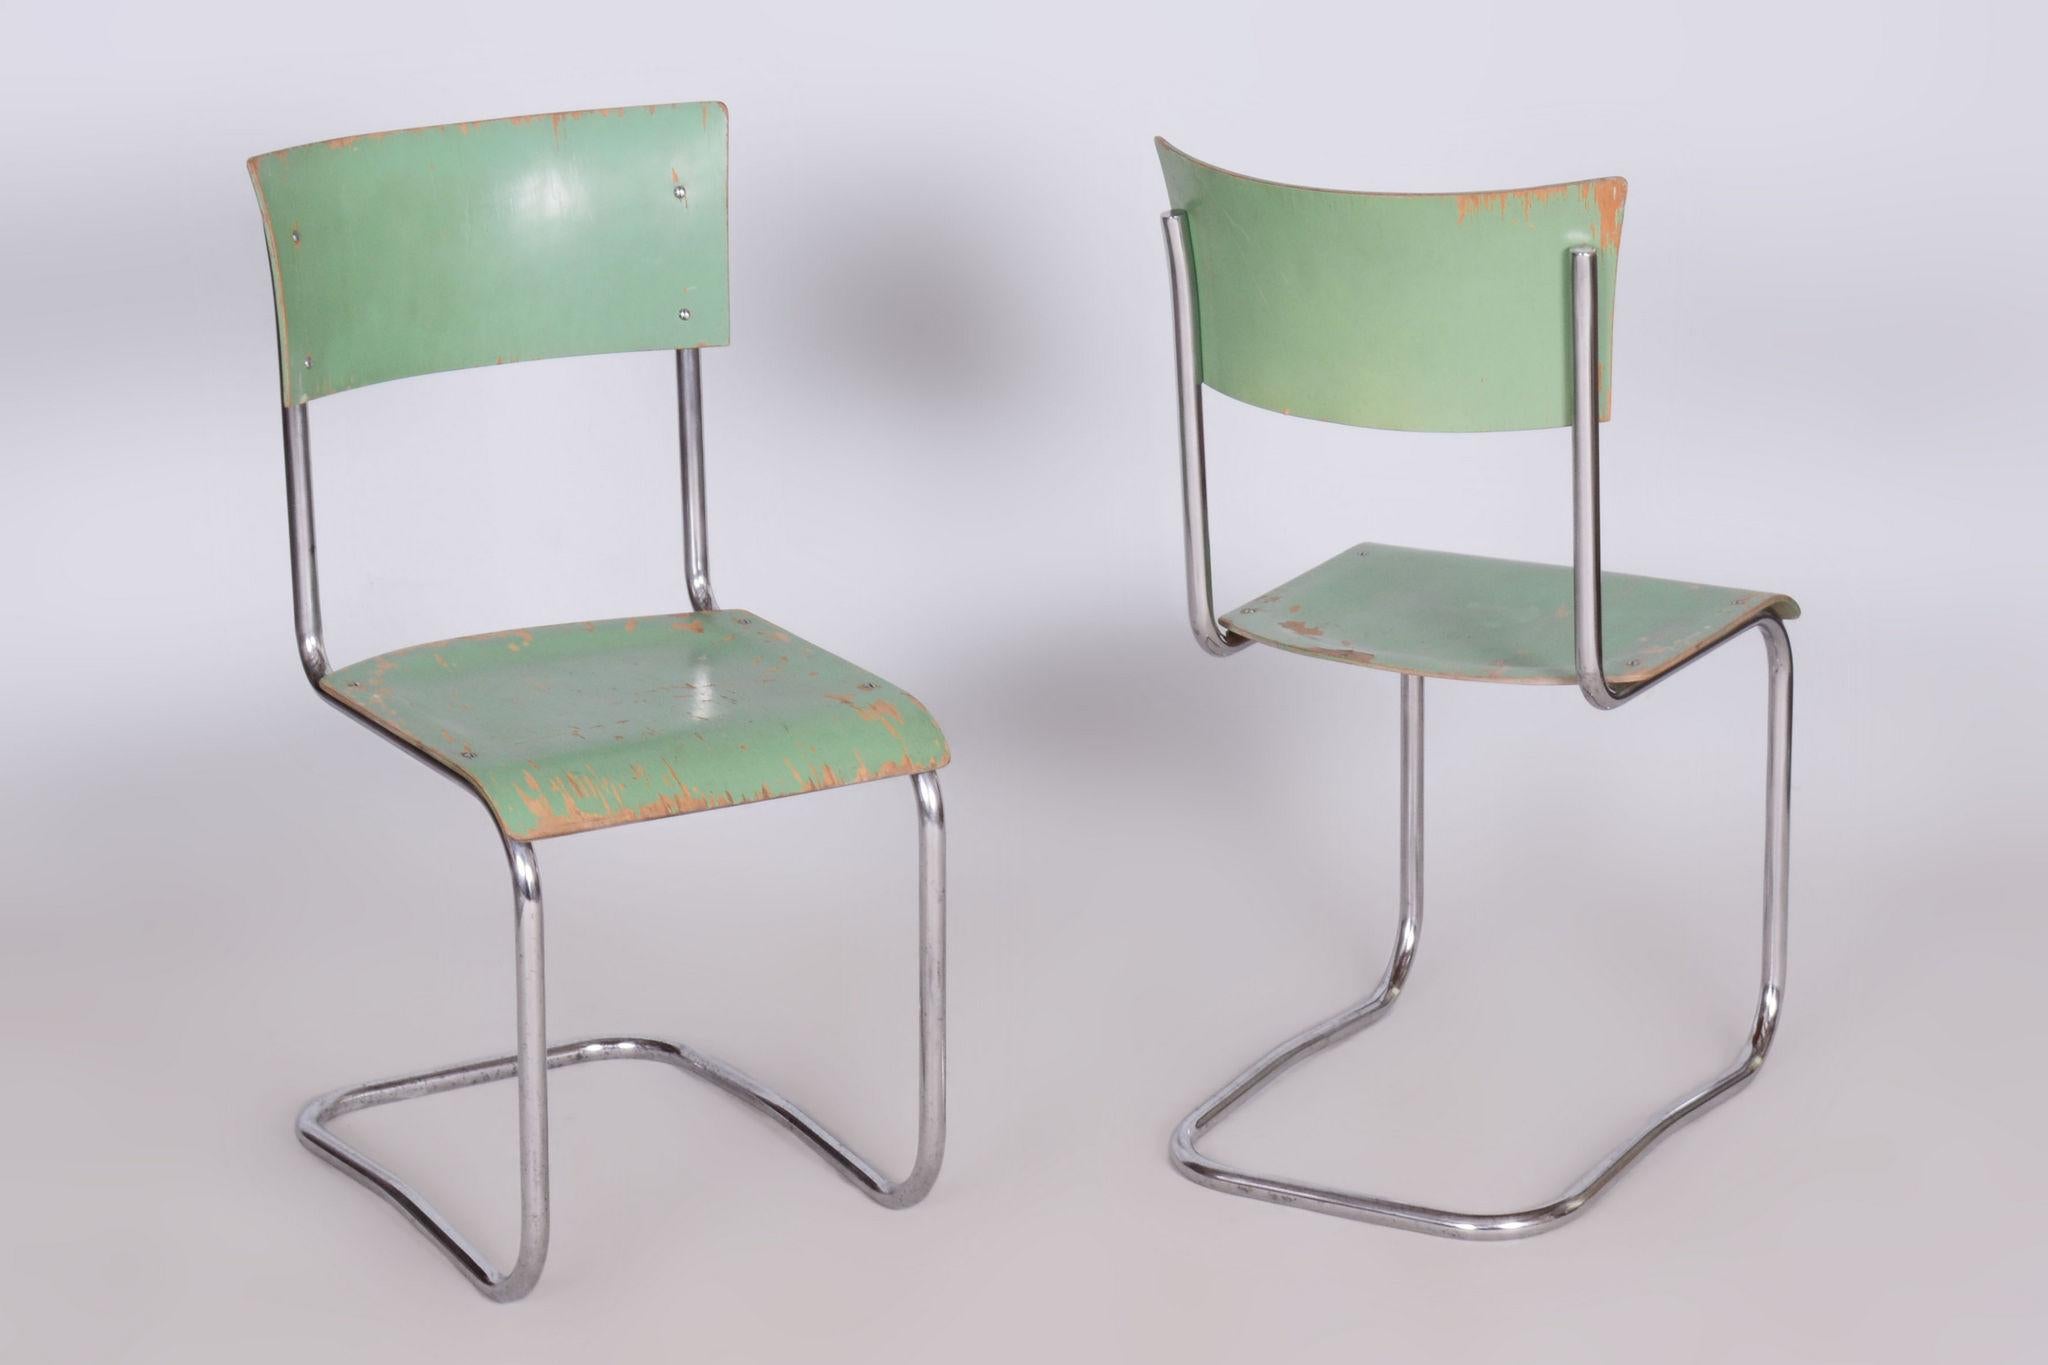 Bauhaus Set of Original Chairs, Robert Slezak, Chrome, Steel, Czechia, 1930s For Sale 2